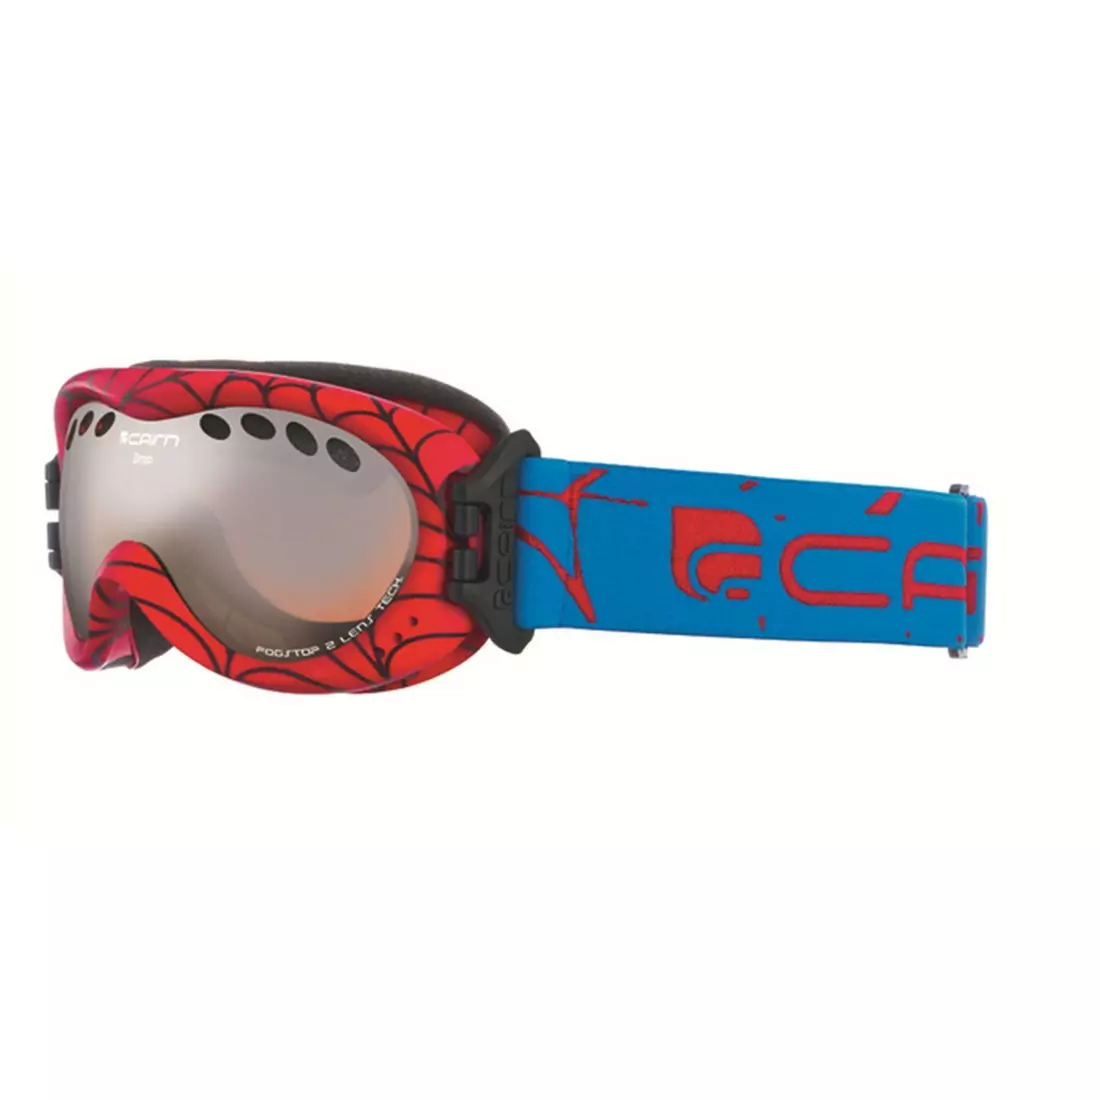 CAIRN Children's ski / snowboard goggles, GOGLE DROP 886, 580389886